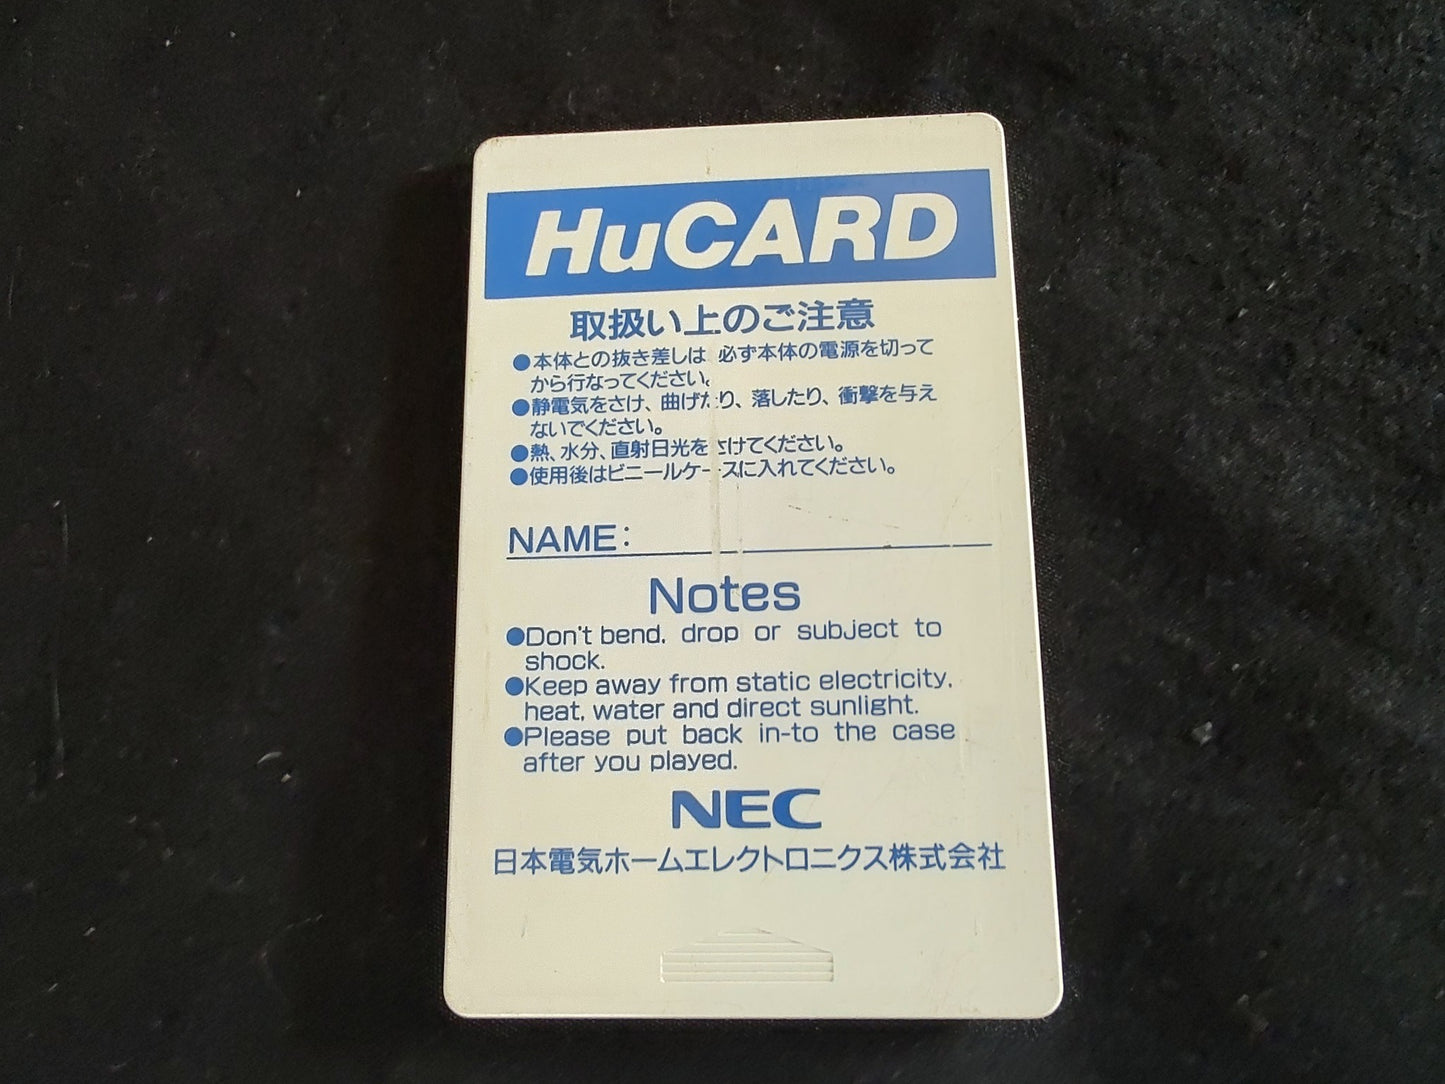 NEC PC Engine white Console (TurboGrafx-16) ,Pad, Box, Game set tested-f0927-